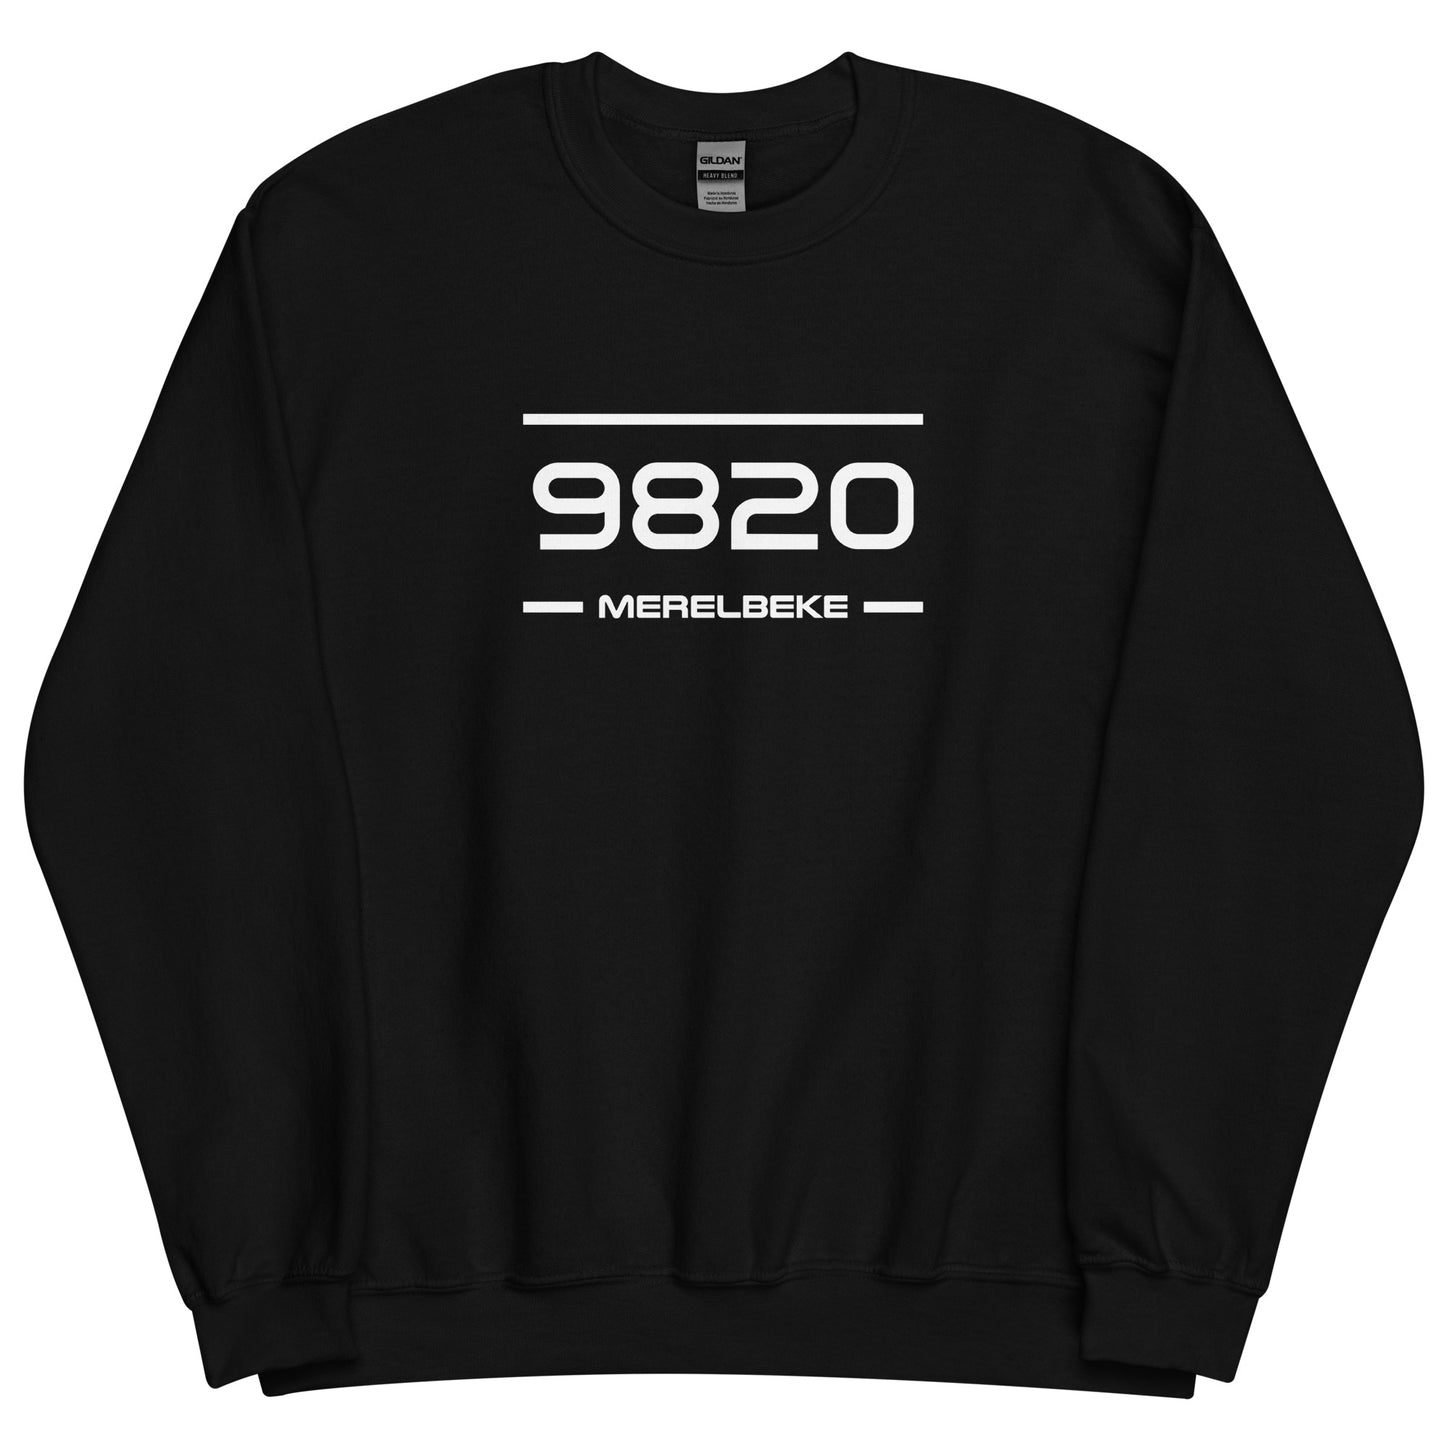 Sweater - 9280 - Merelbeke (M/V)